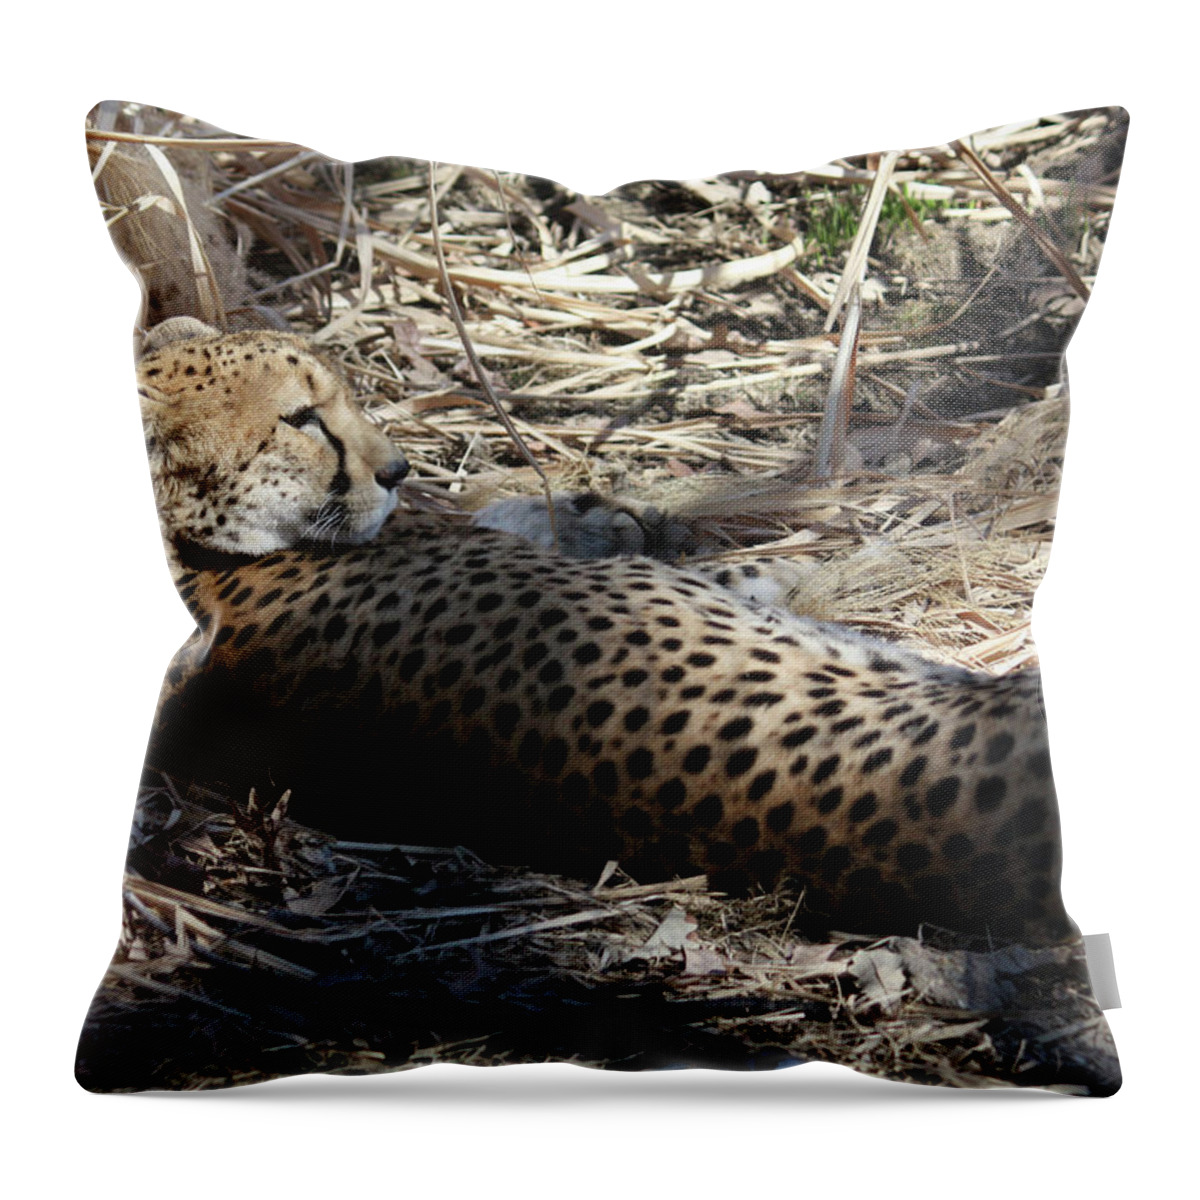 Maryland Throw Pillow featuring the photograph Cheetah Awakened by Ronald Reid